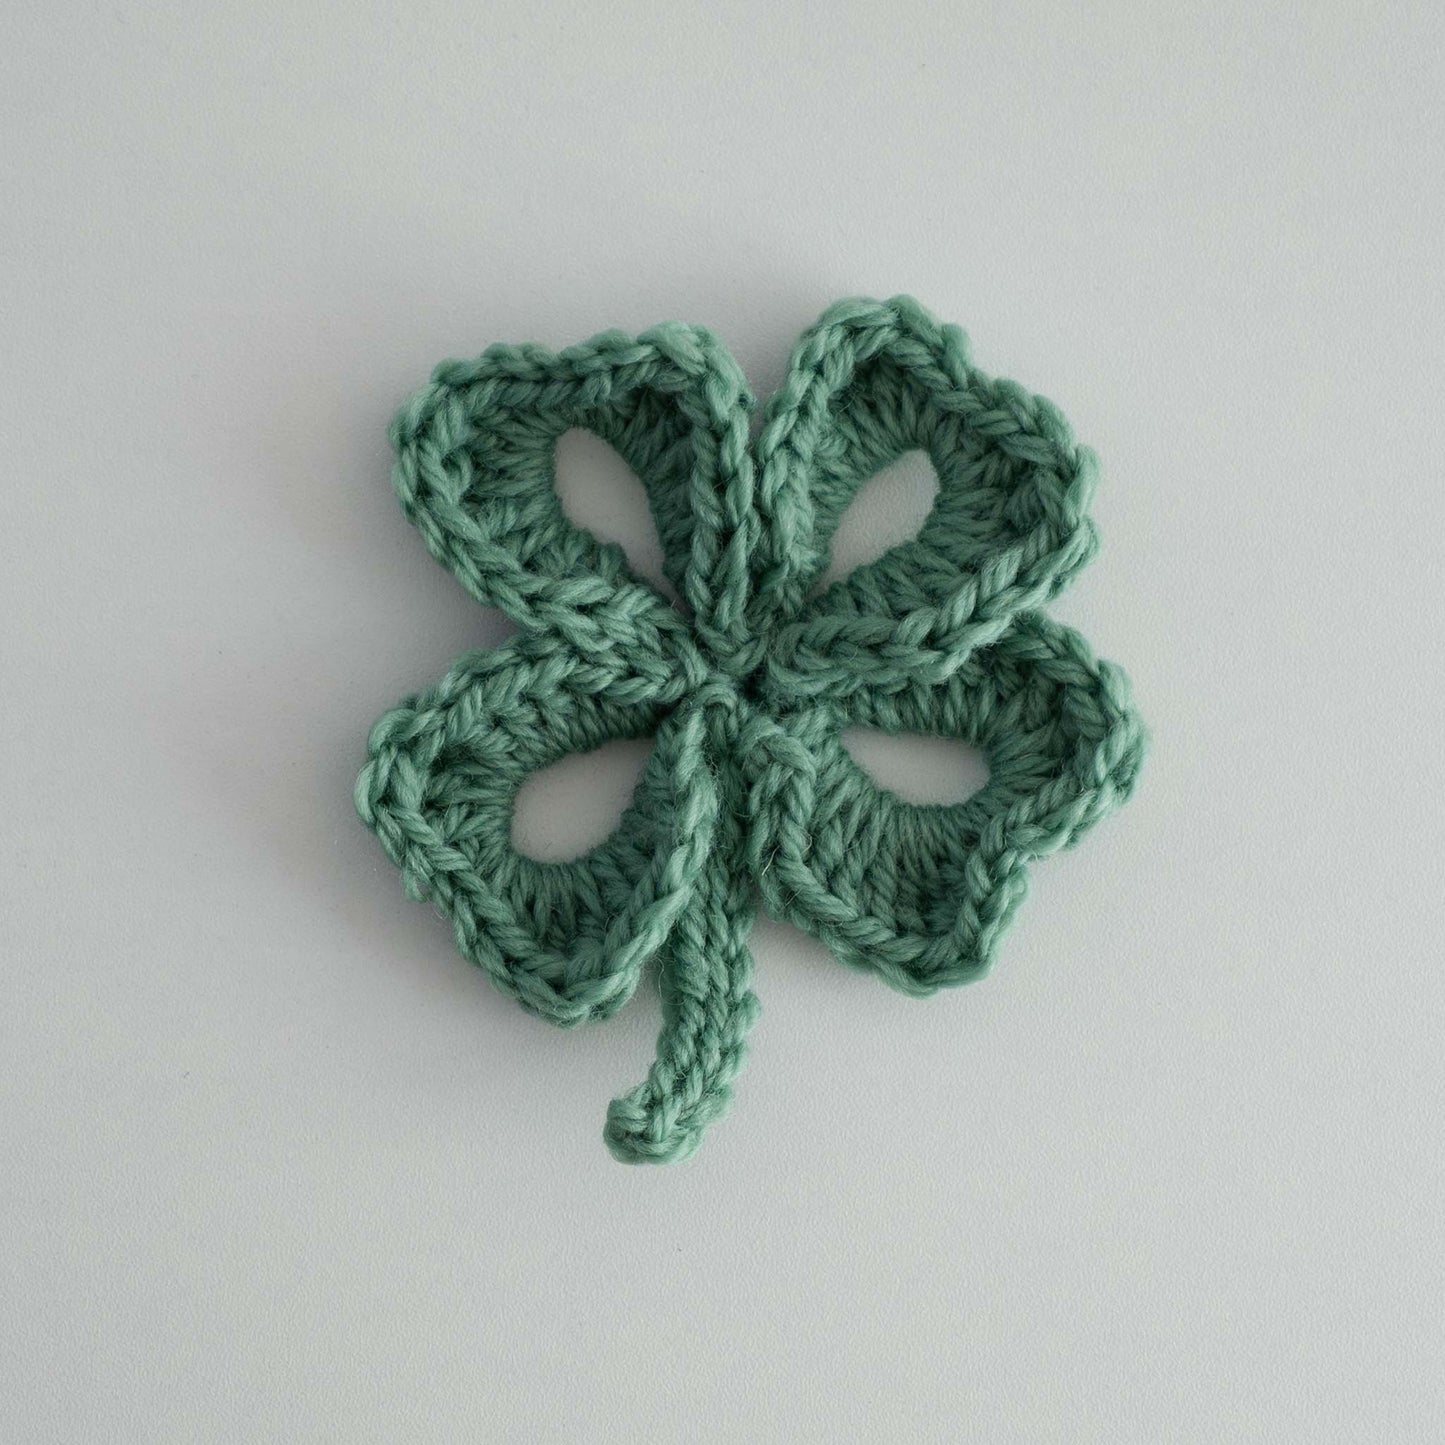 Crochet Four Leaf Clover PDF